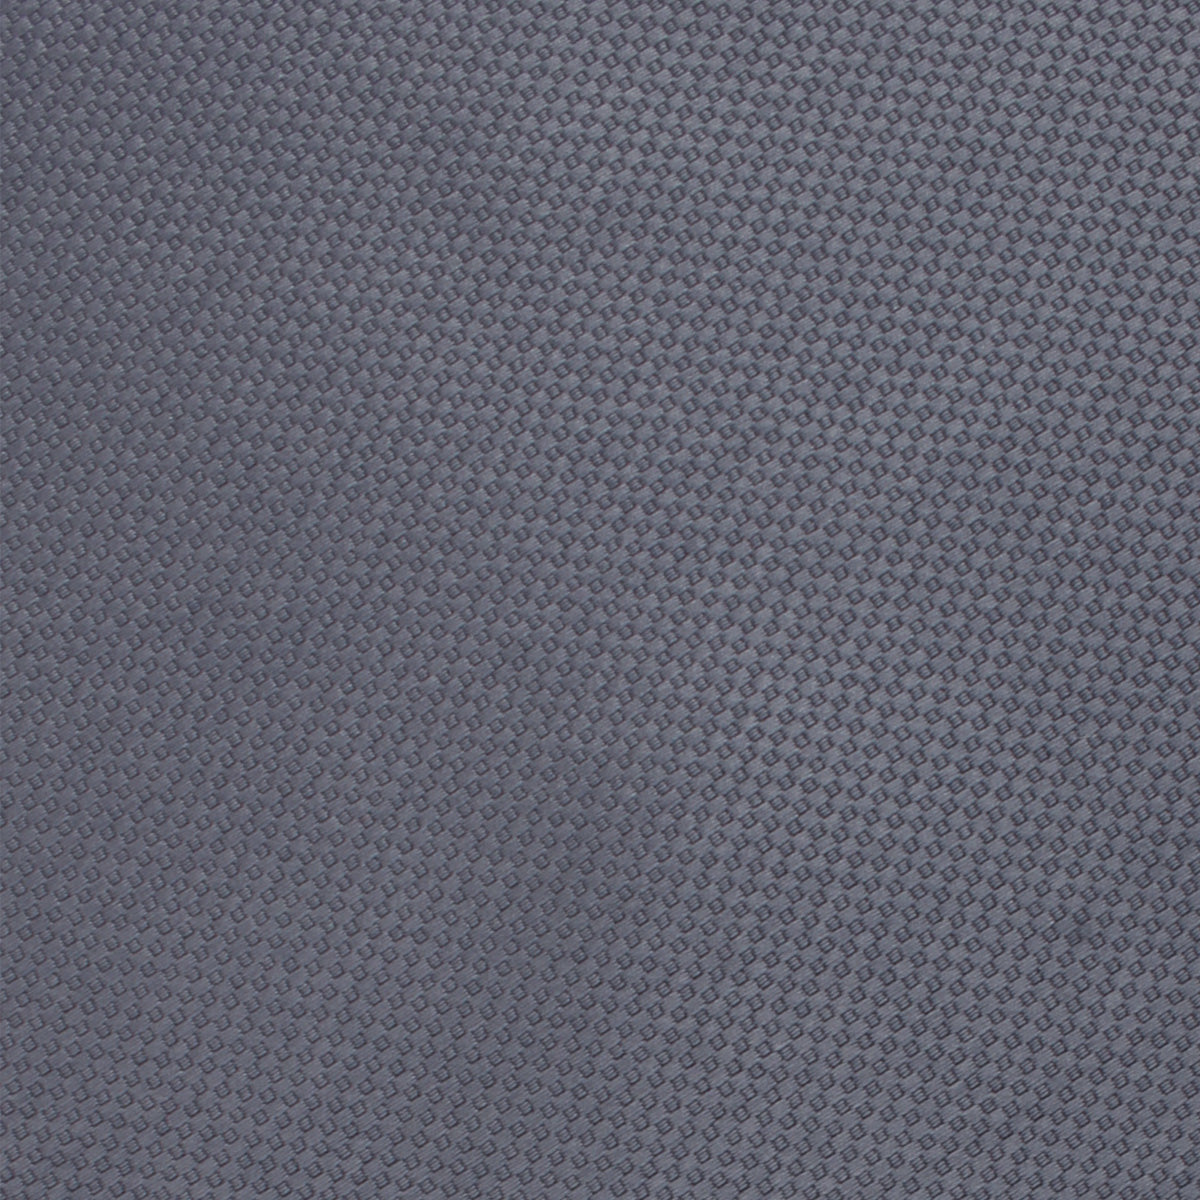 Slate Grey Charcoal Basket Weave Necktie Fabric